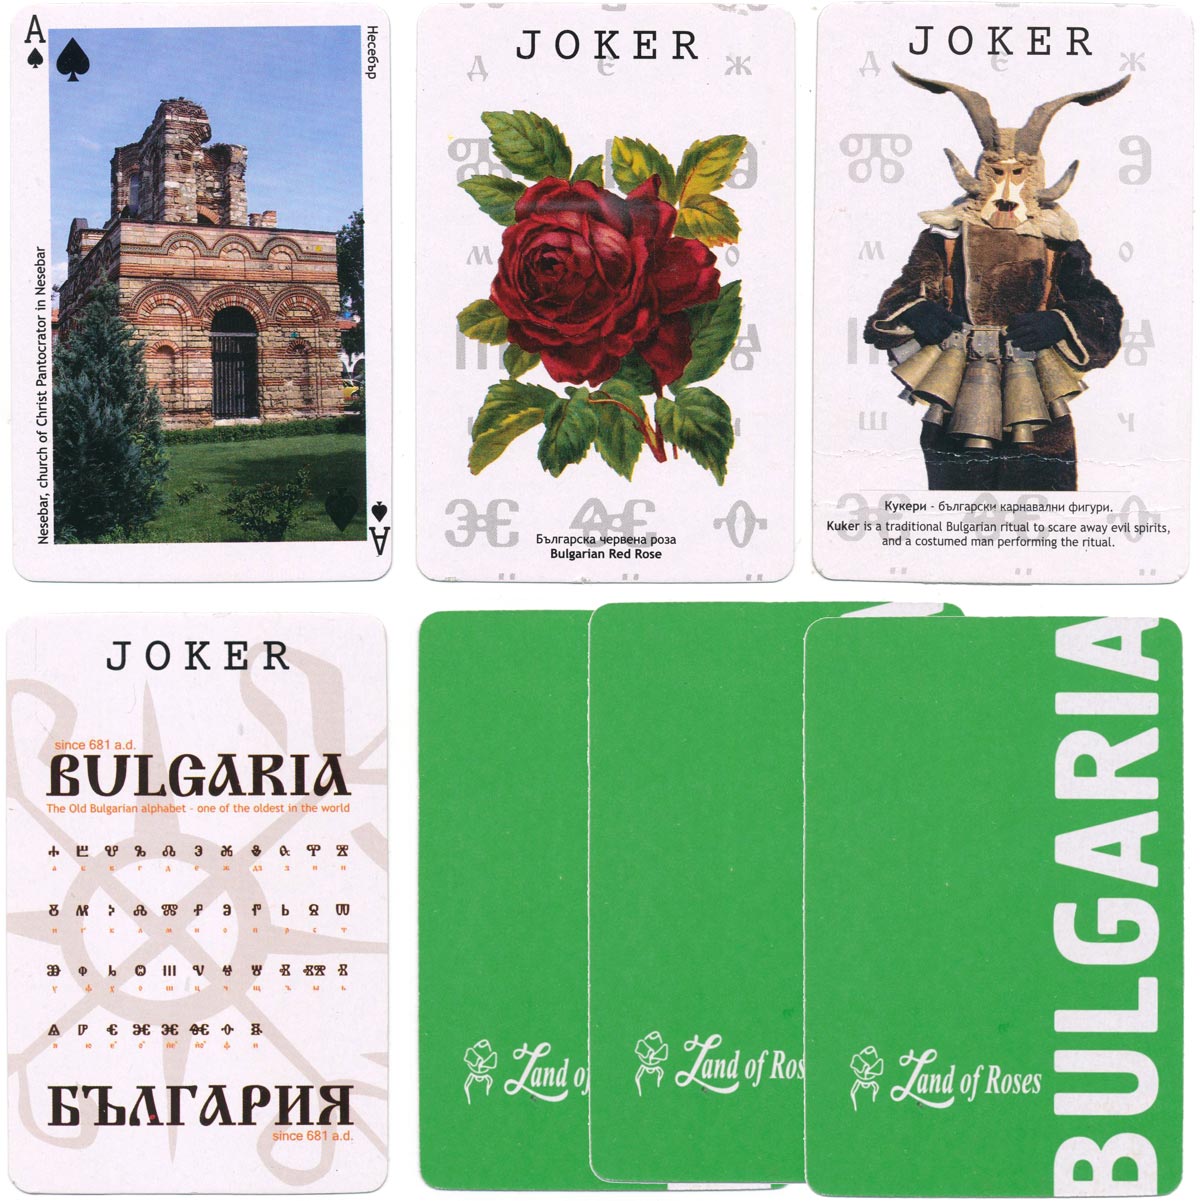 Bulgaria Souvenir by Land of Roses Ltd